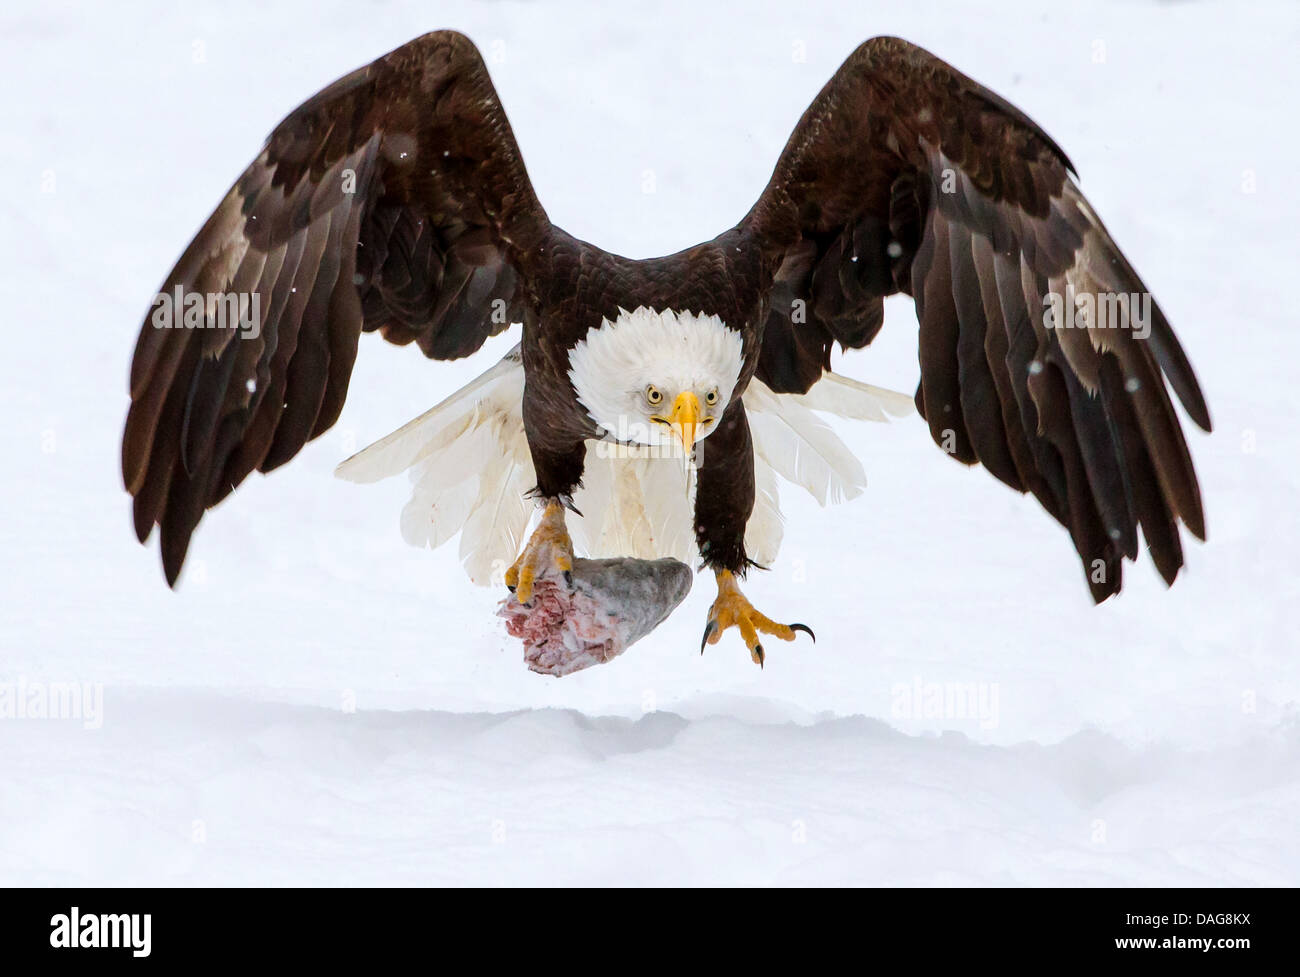 American bald eagle (Haliaeetus leucocephalus), with salmon head in talon landing in snow, USA, Alaska, Chilkat Bald Eagle Preserve Stock Photo